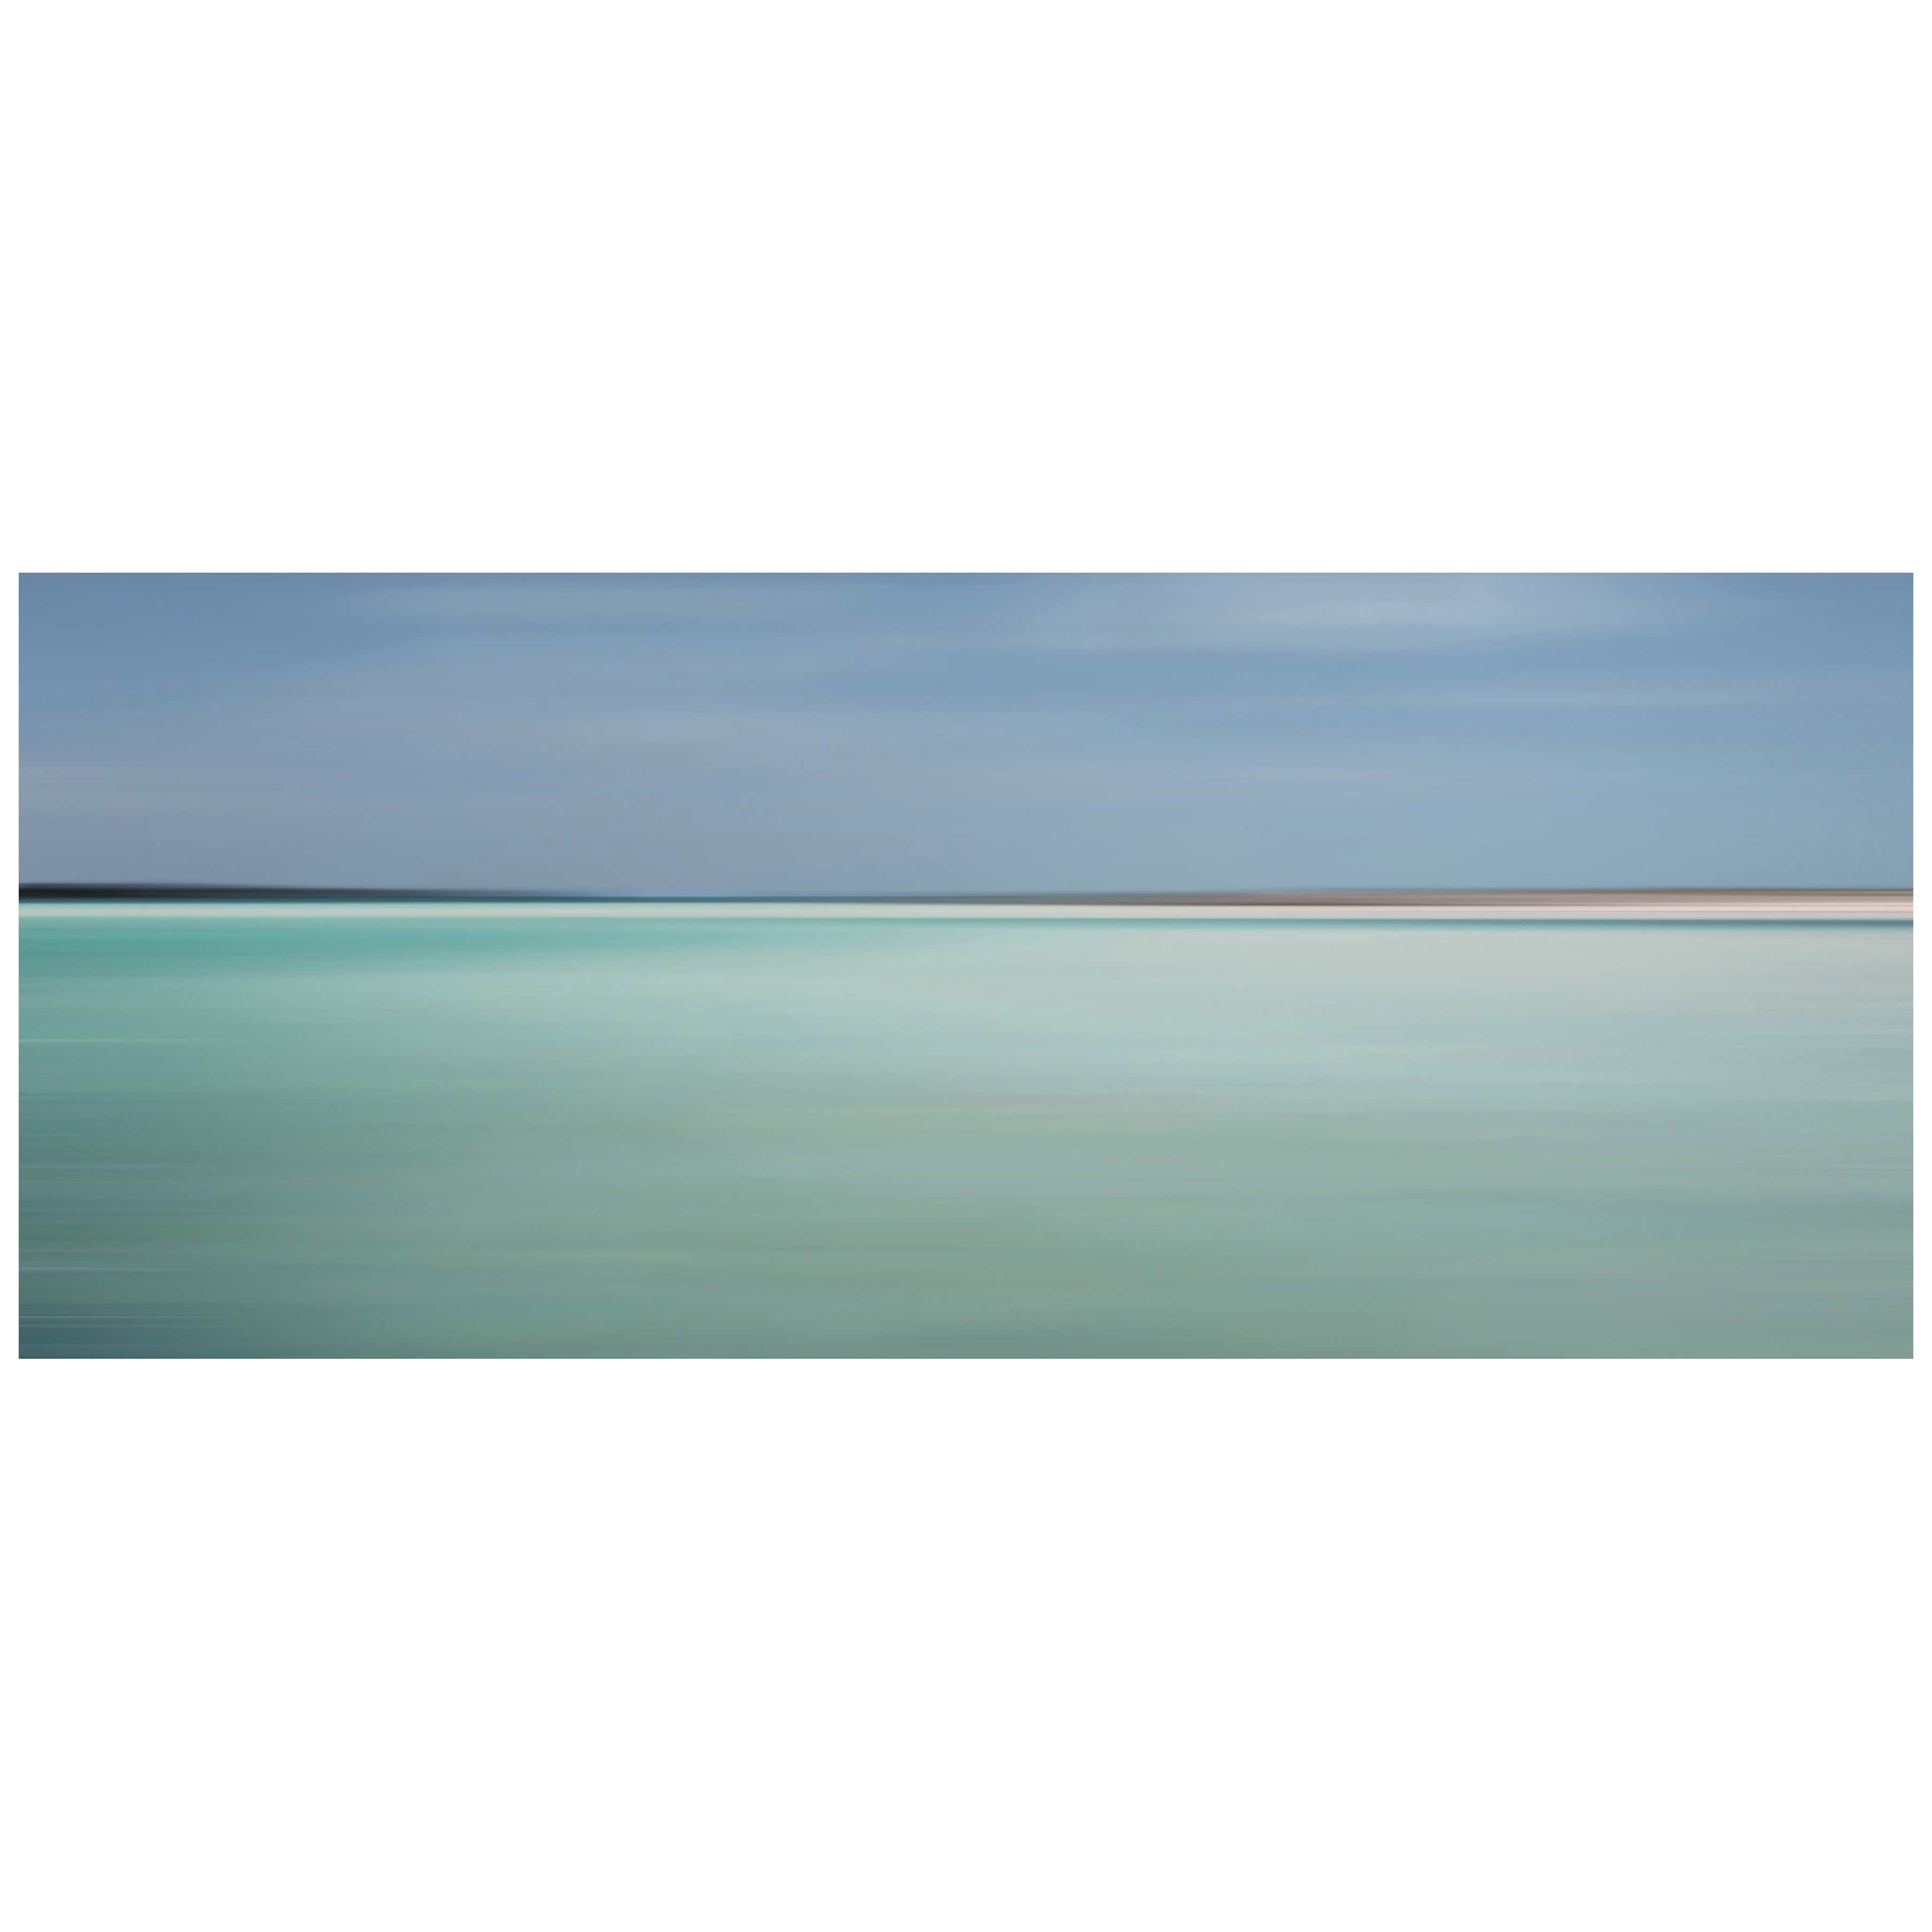 Bonnie Edelman "Tranquilo Beach Panorama, T&C" Photograph, Scapes Series, 2011